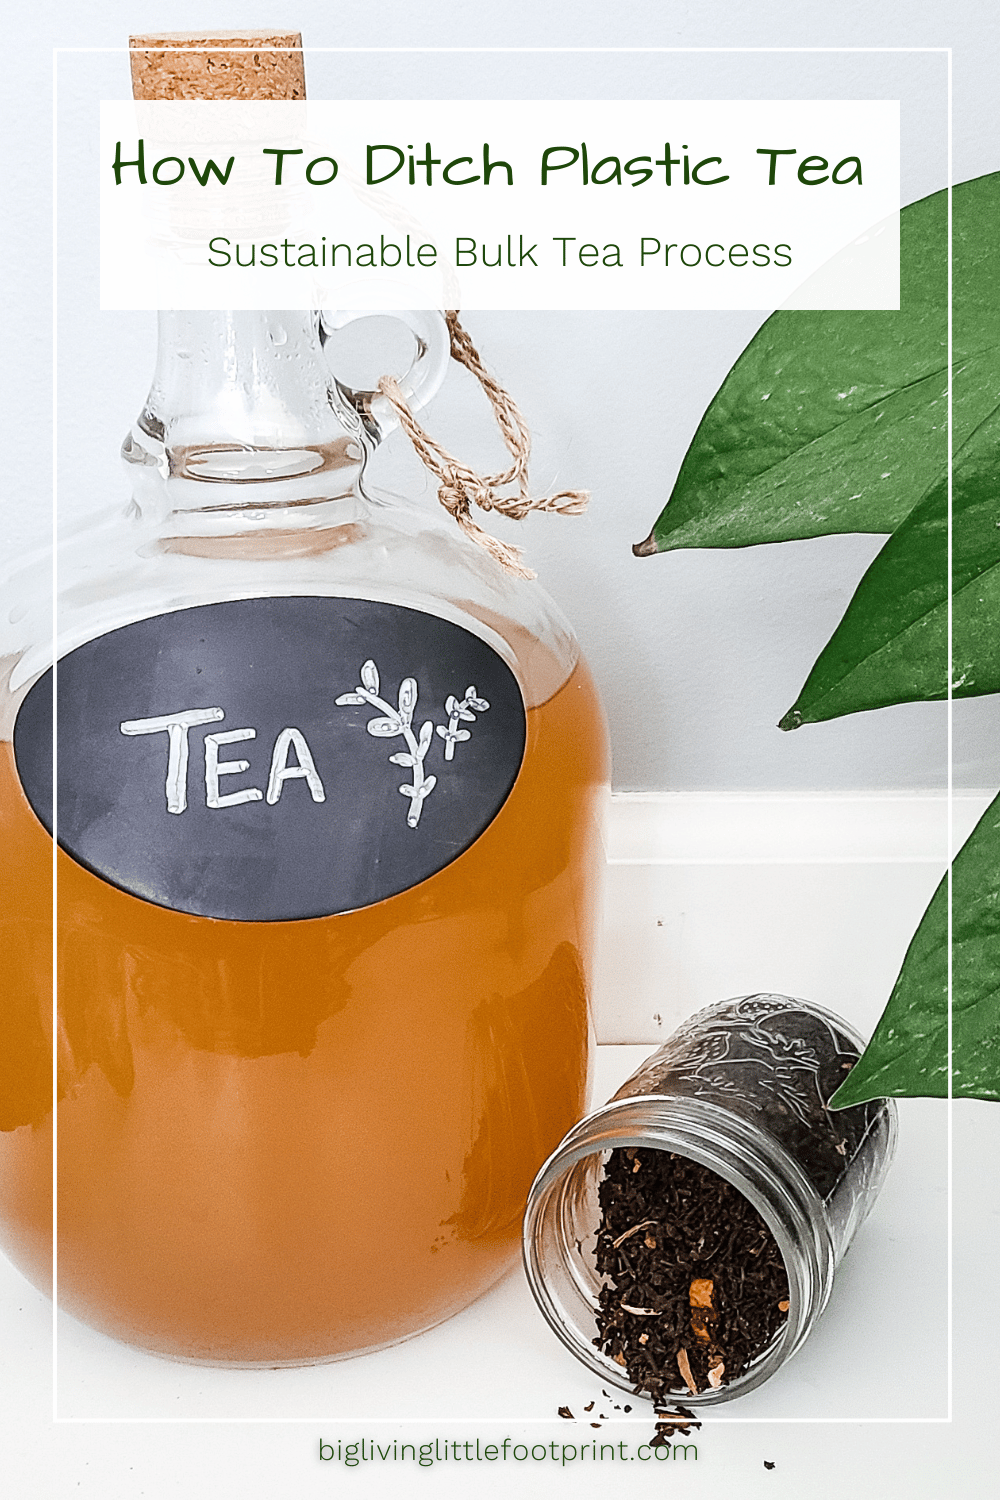 How To Ditch Plastic Tea – Sustainable Bulk Tea Process